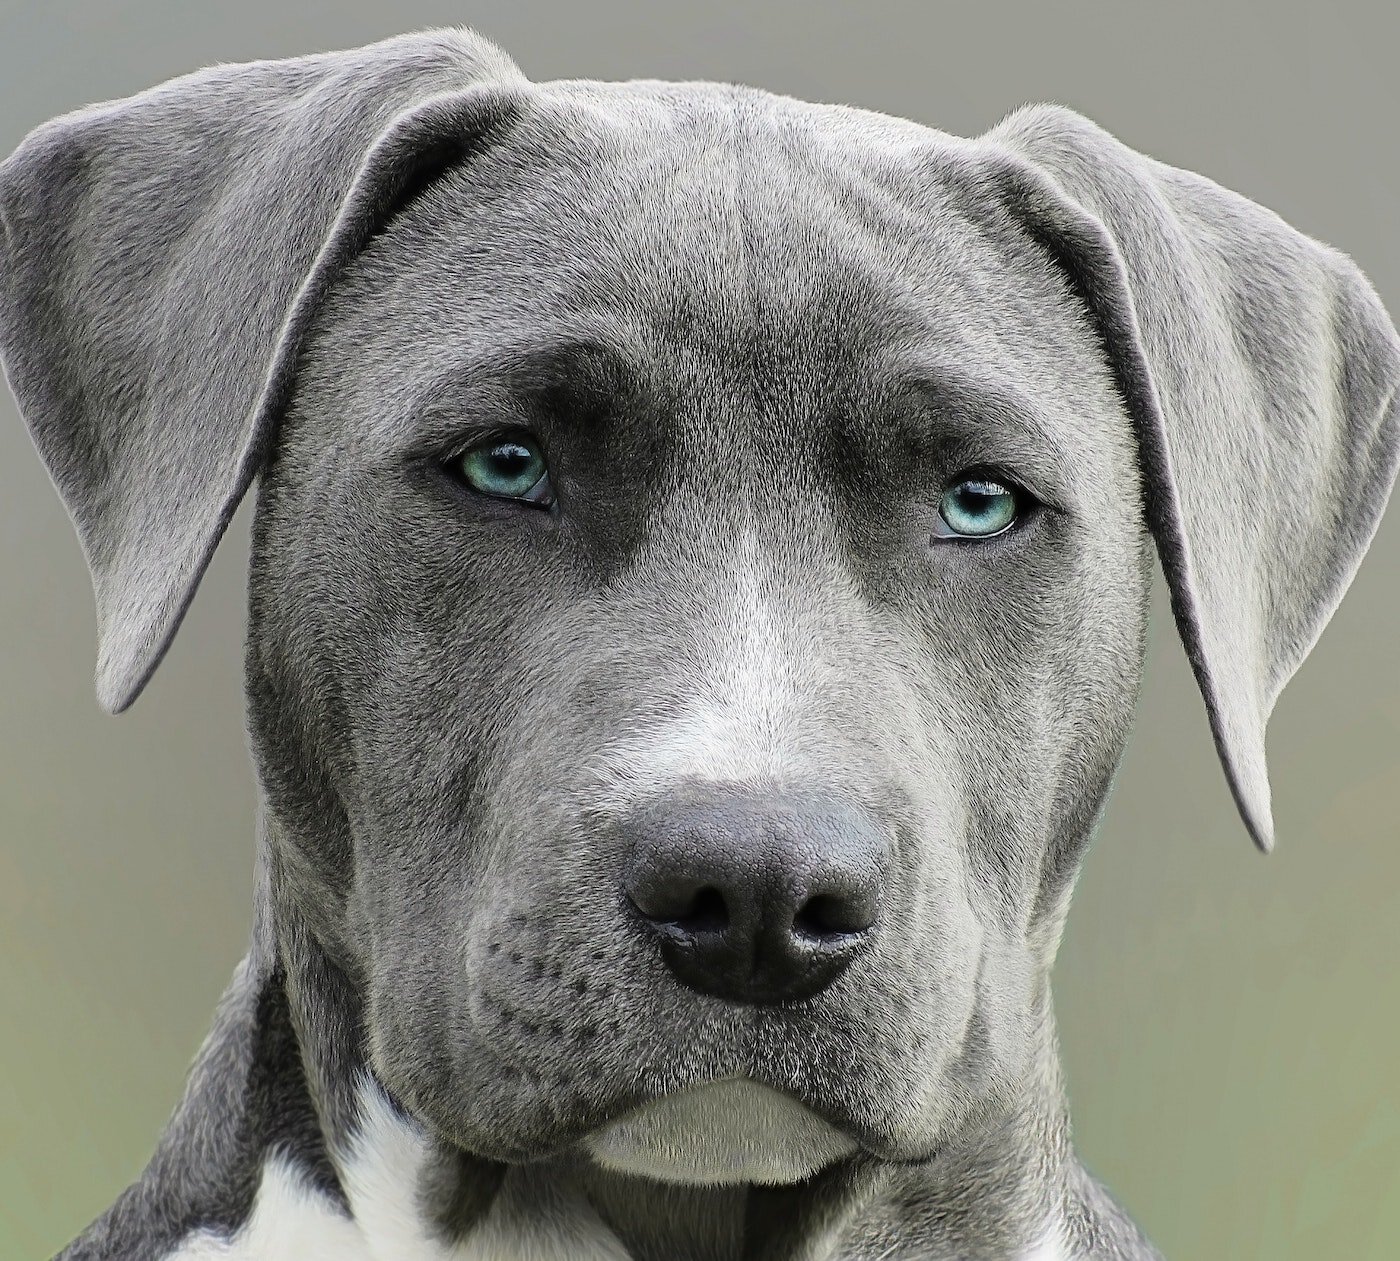 Grey dog looking directly at the camera